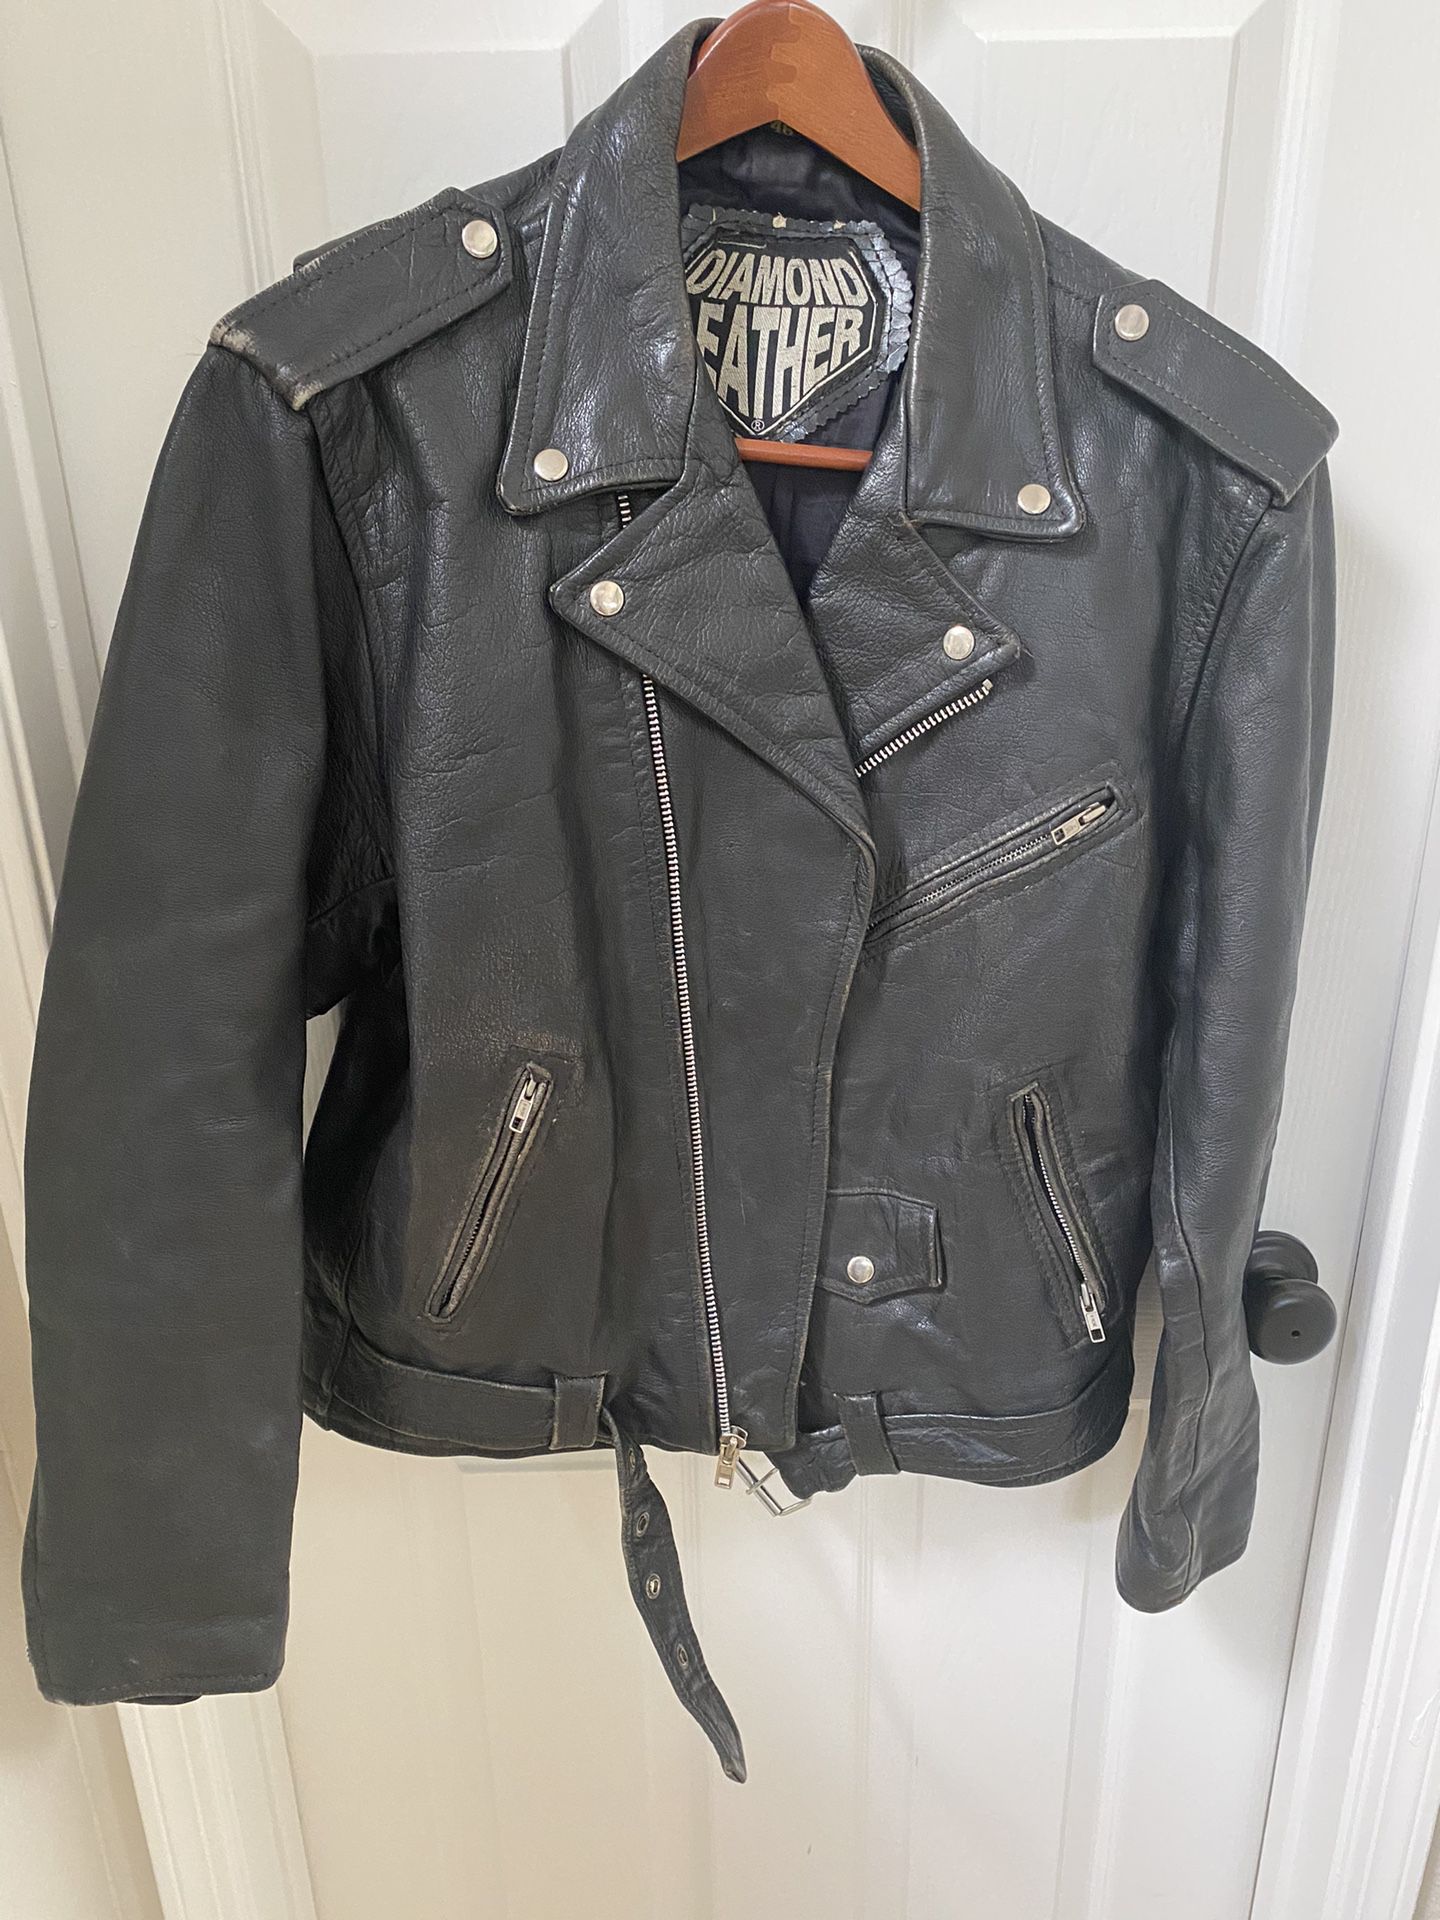 Diamond Leather Motorcycle Jacket Xl